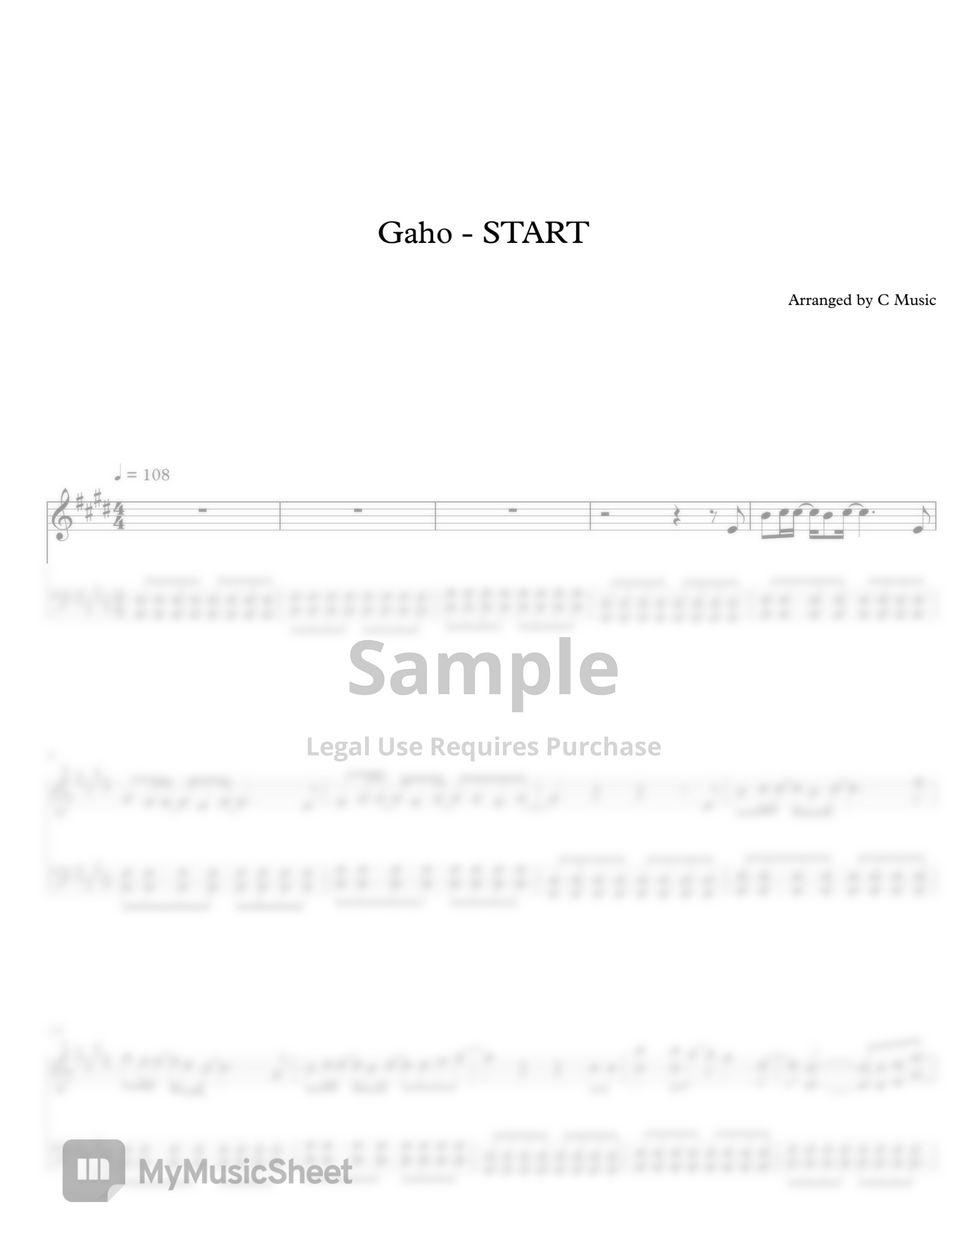 Gaho 가호 - Start 시작 (梨泰院 이태원클라쓰 OST) by C Music